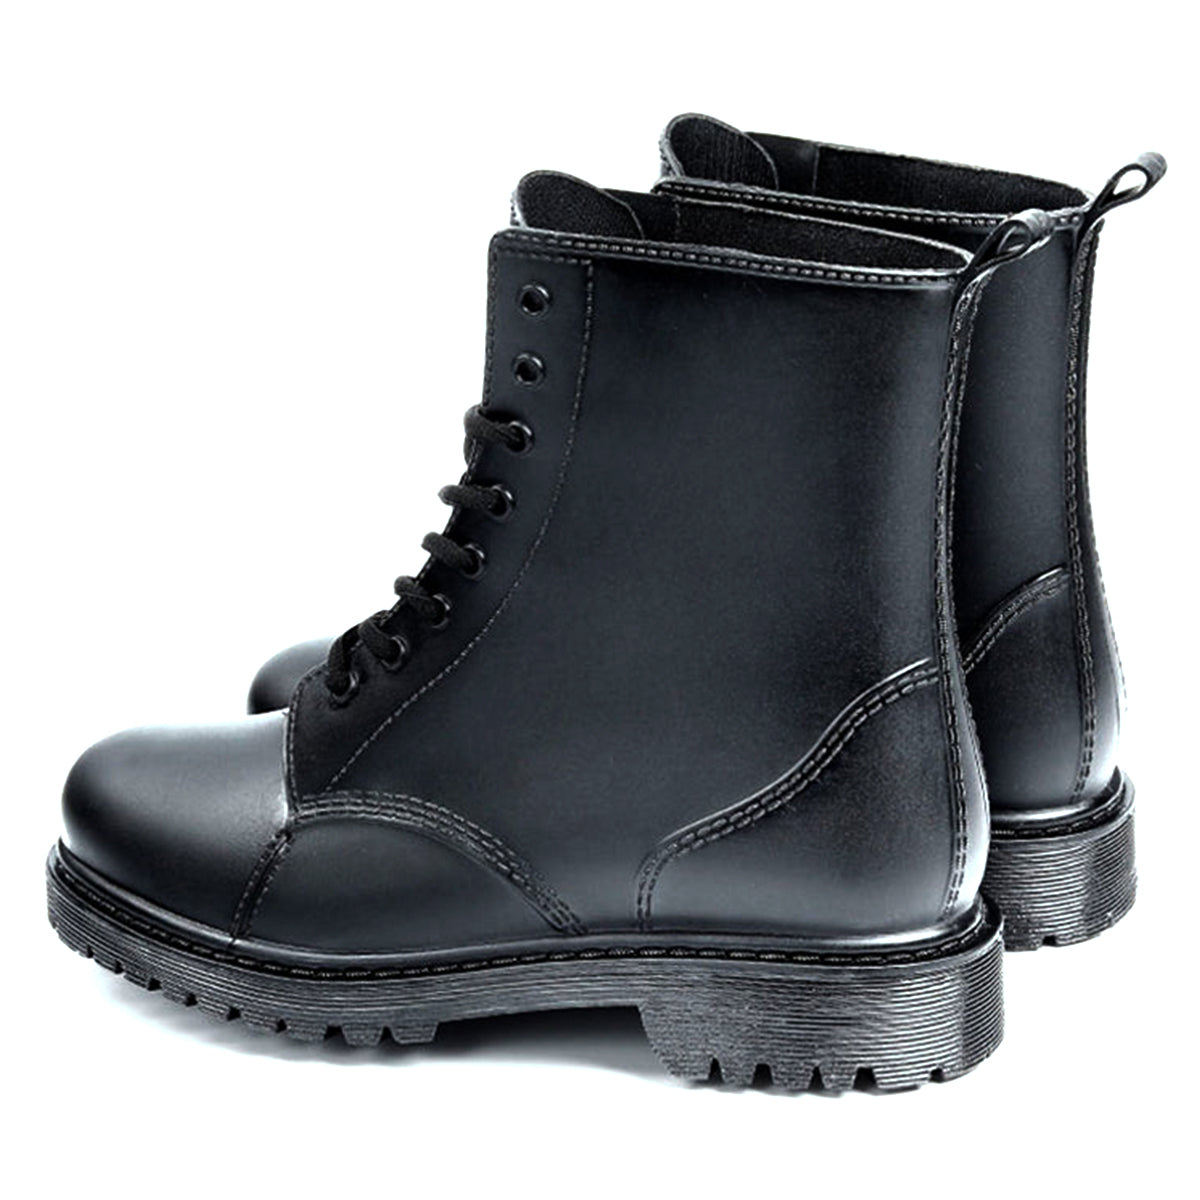 Nomad Black Waterproof Boots